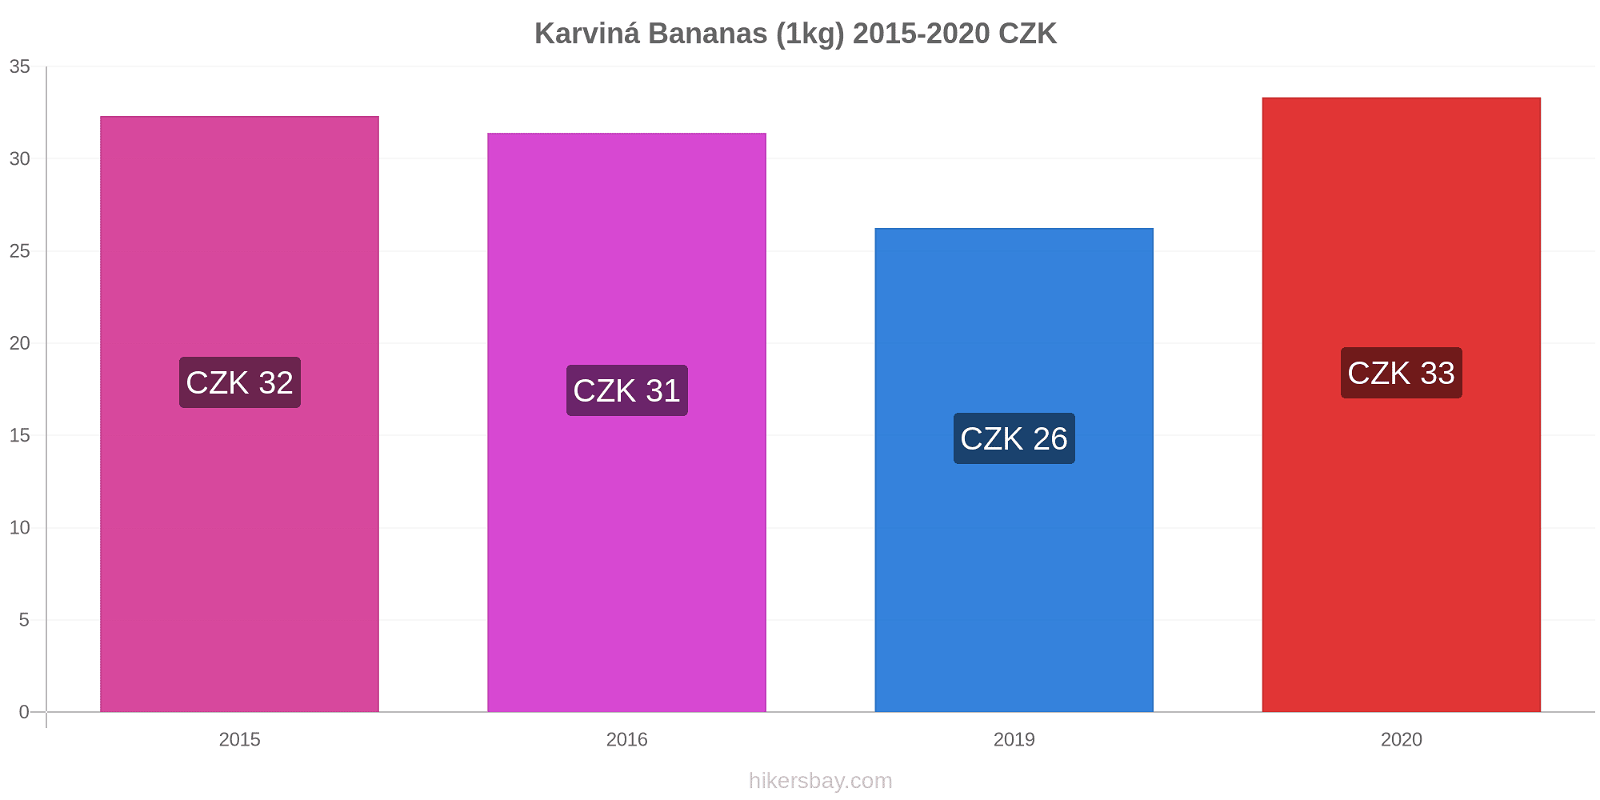 Karviná price changes Bananas (1kg) hikersbay.com